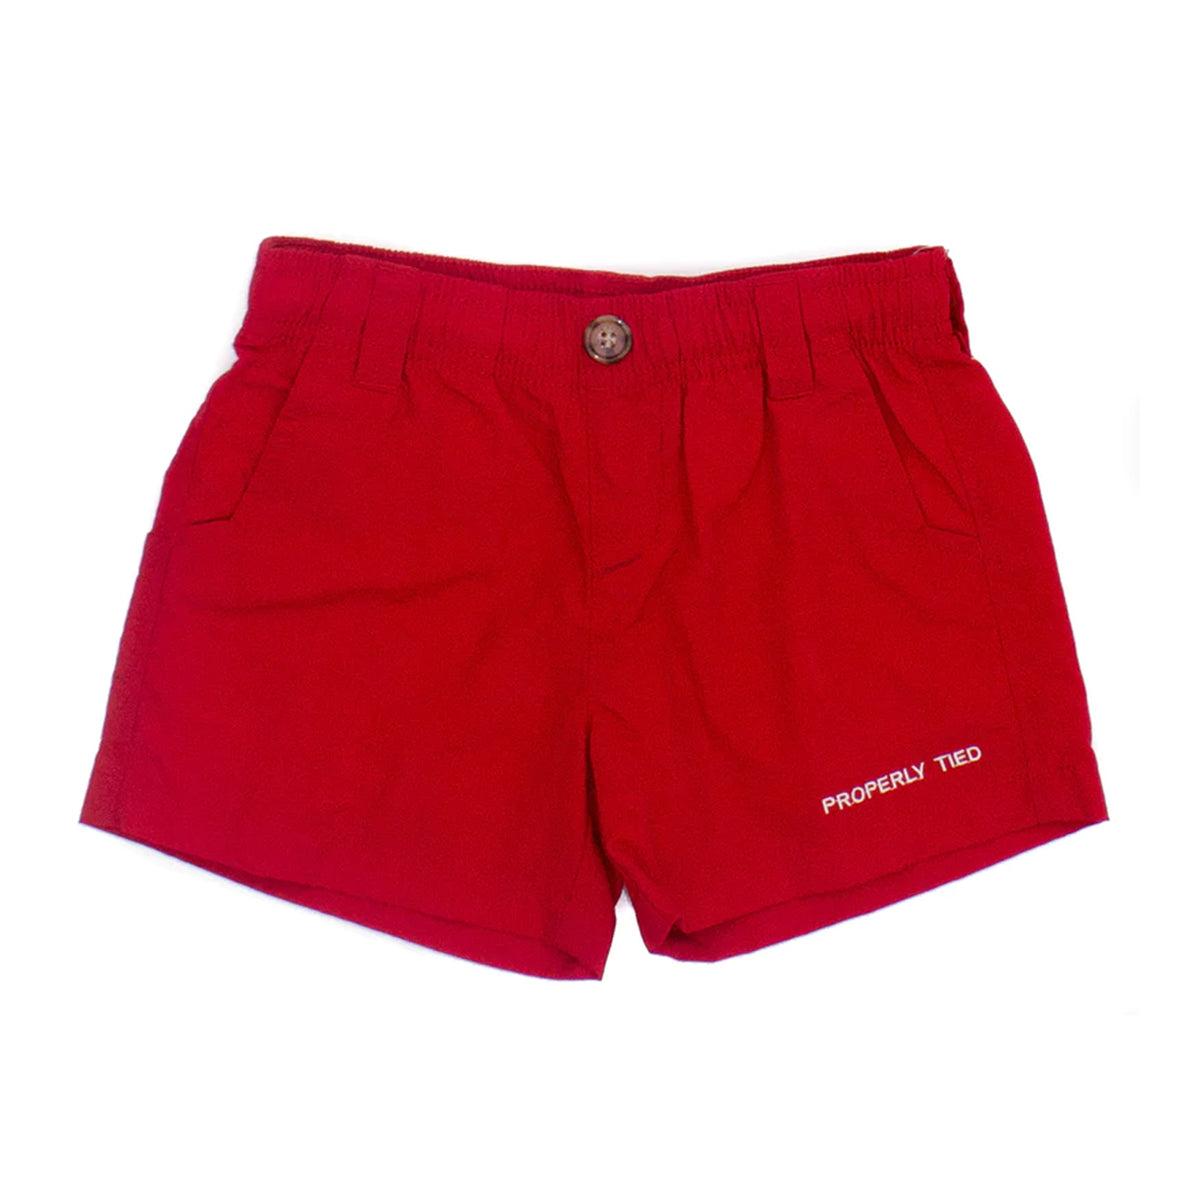 Properly Tied Toddler Boy's Red Mallard Shorts